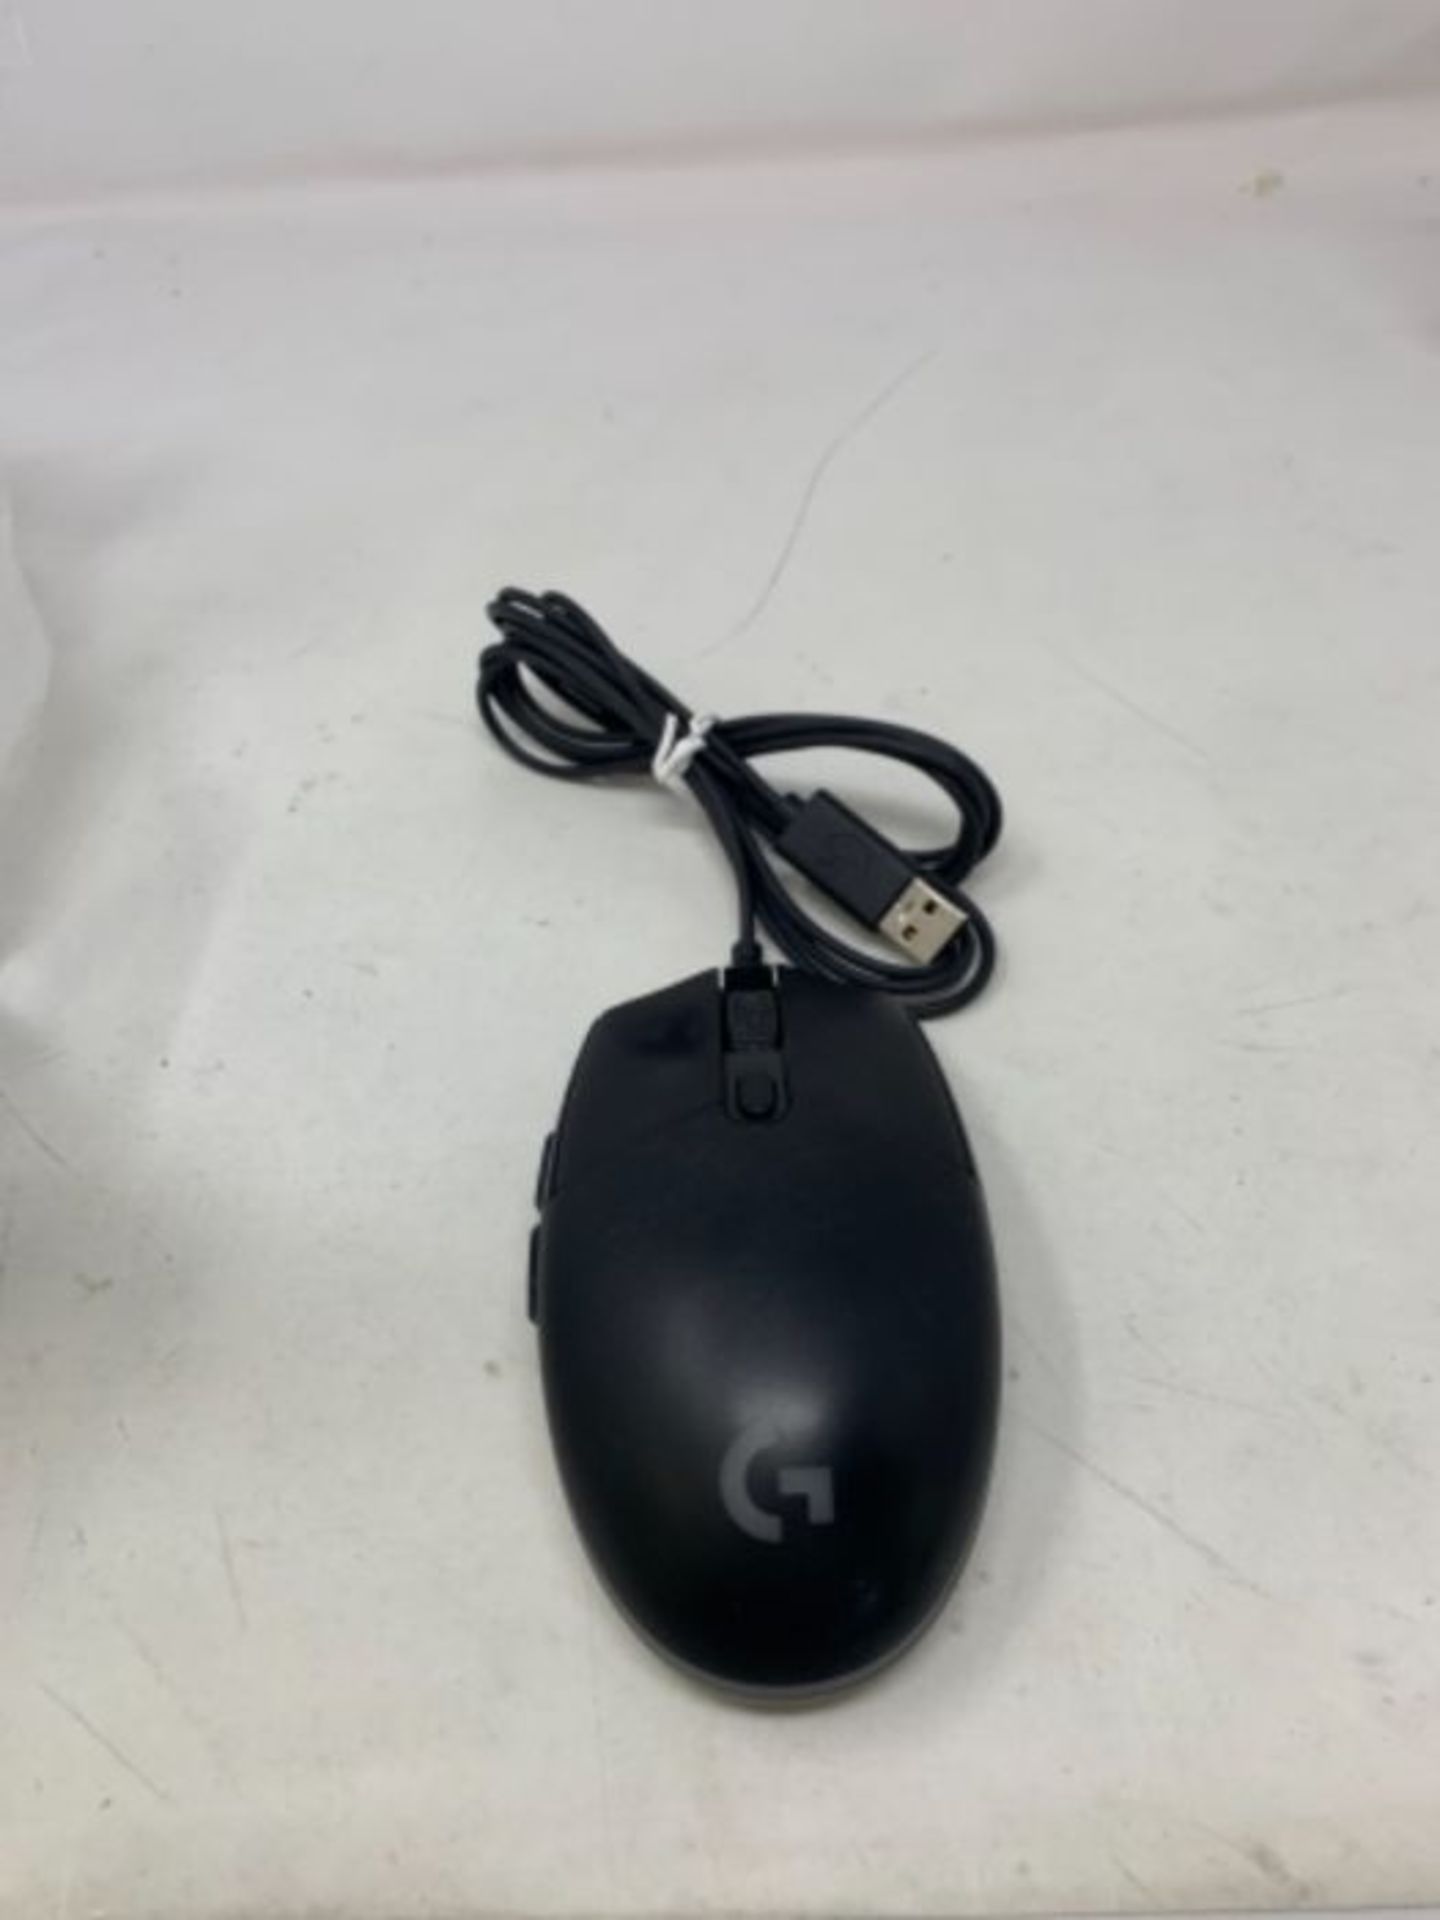 Logitech G203 Lightsync Gaming Mouse with Customizable RGB Lighting, 6 Programmable Bu - Image 2 of 2